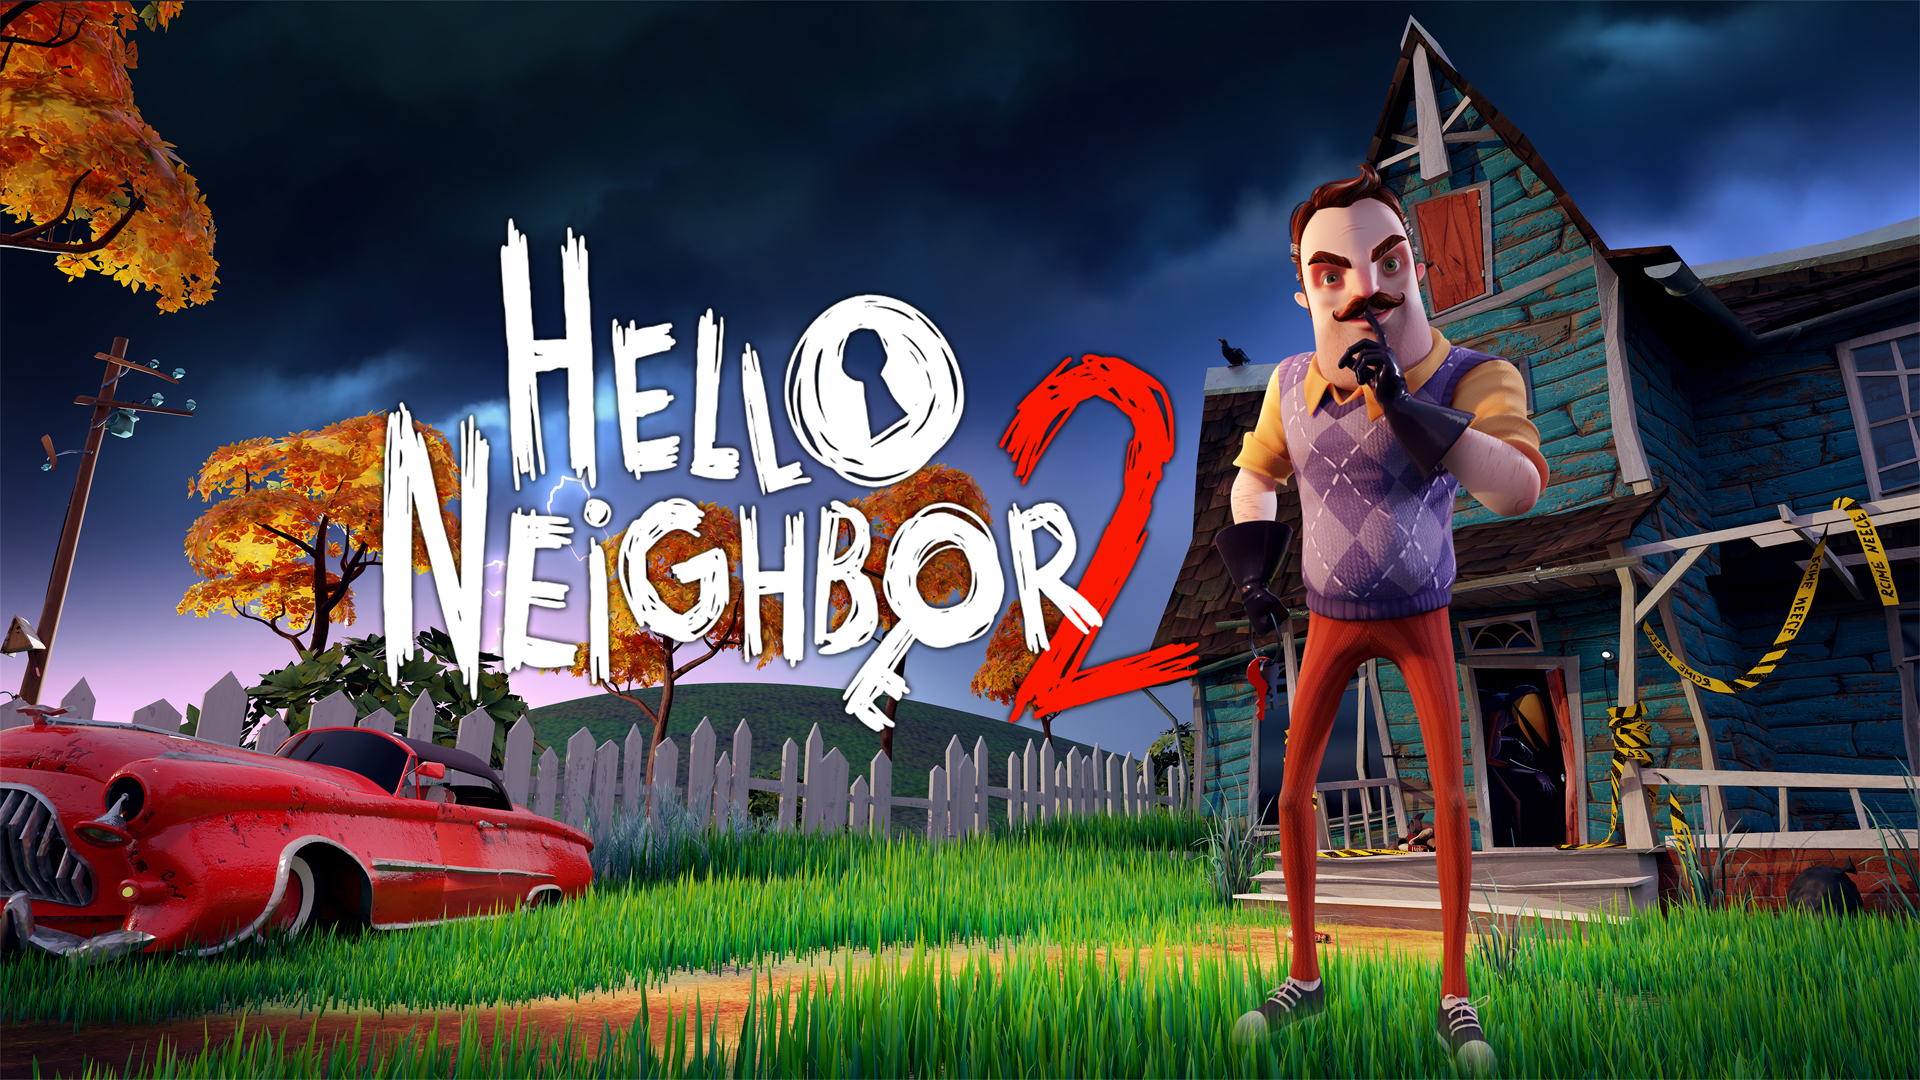 hello neighbor 2 alpha 1 code